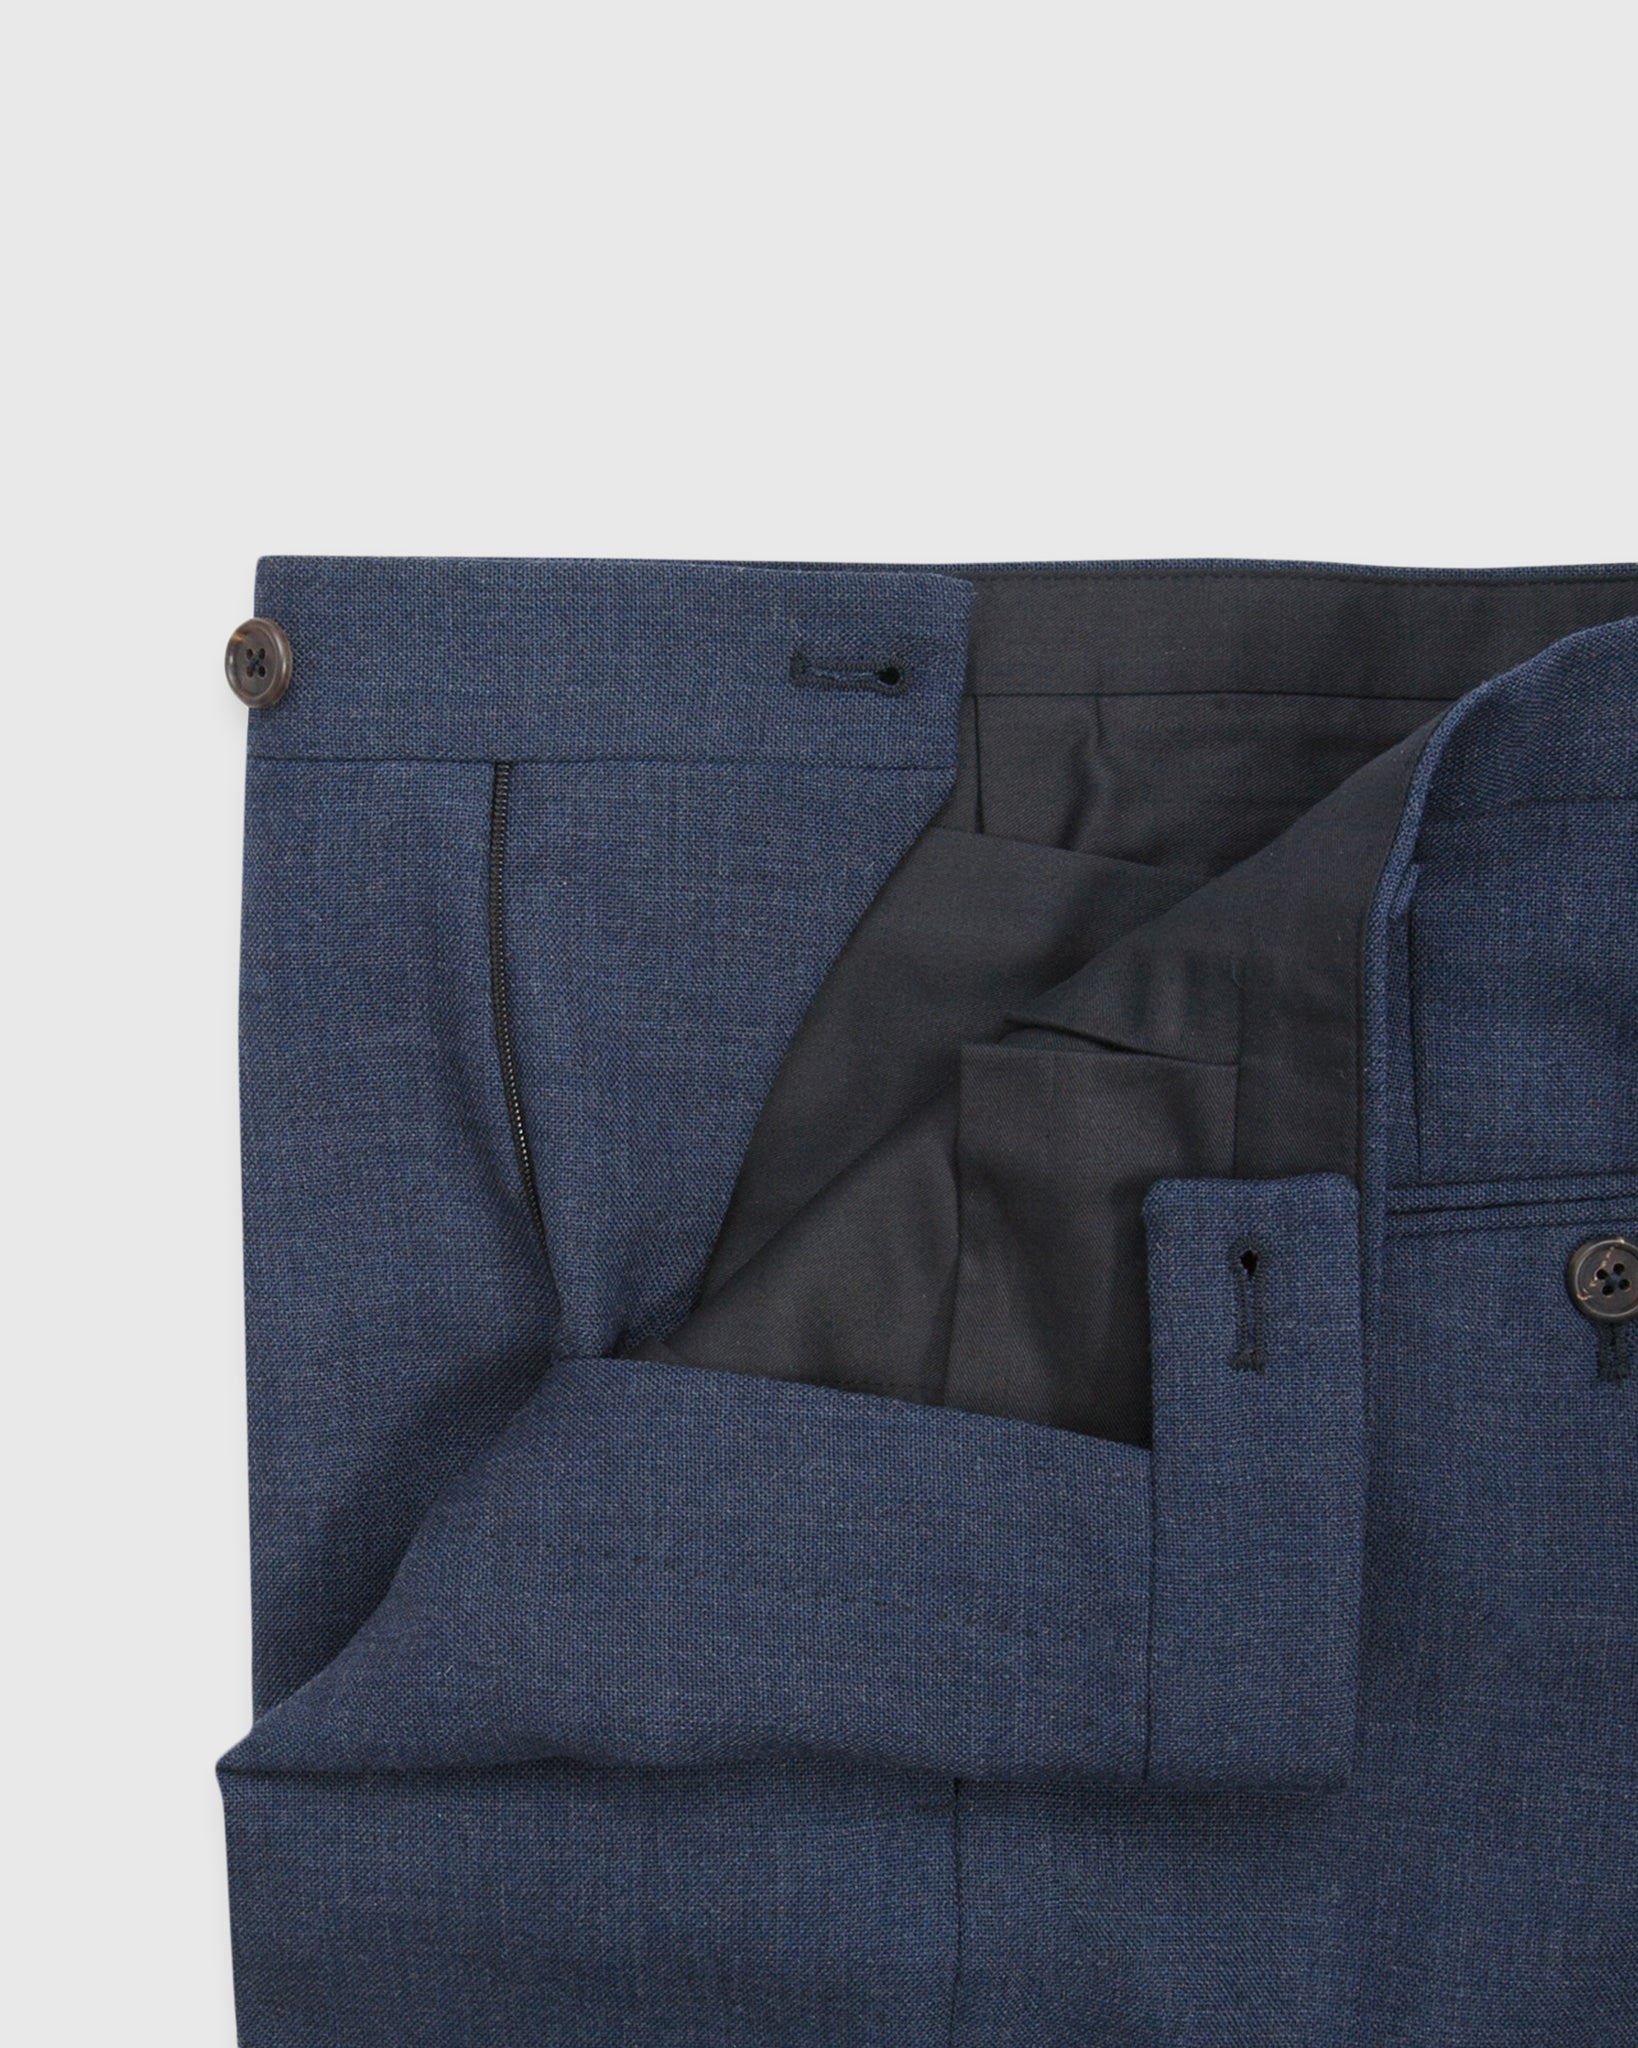 Kincaid No. 3 Suit in Air Force Blue High-Twist | Shop Sid Mashburn